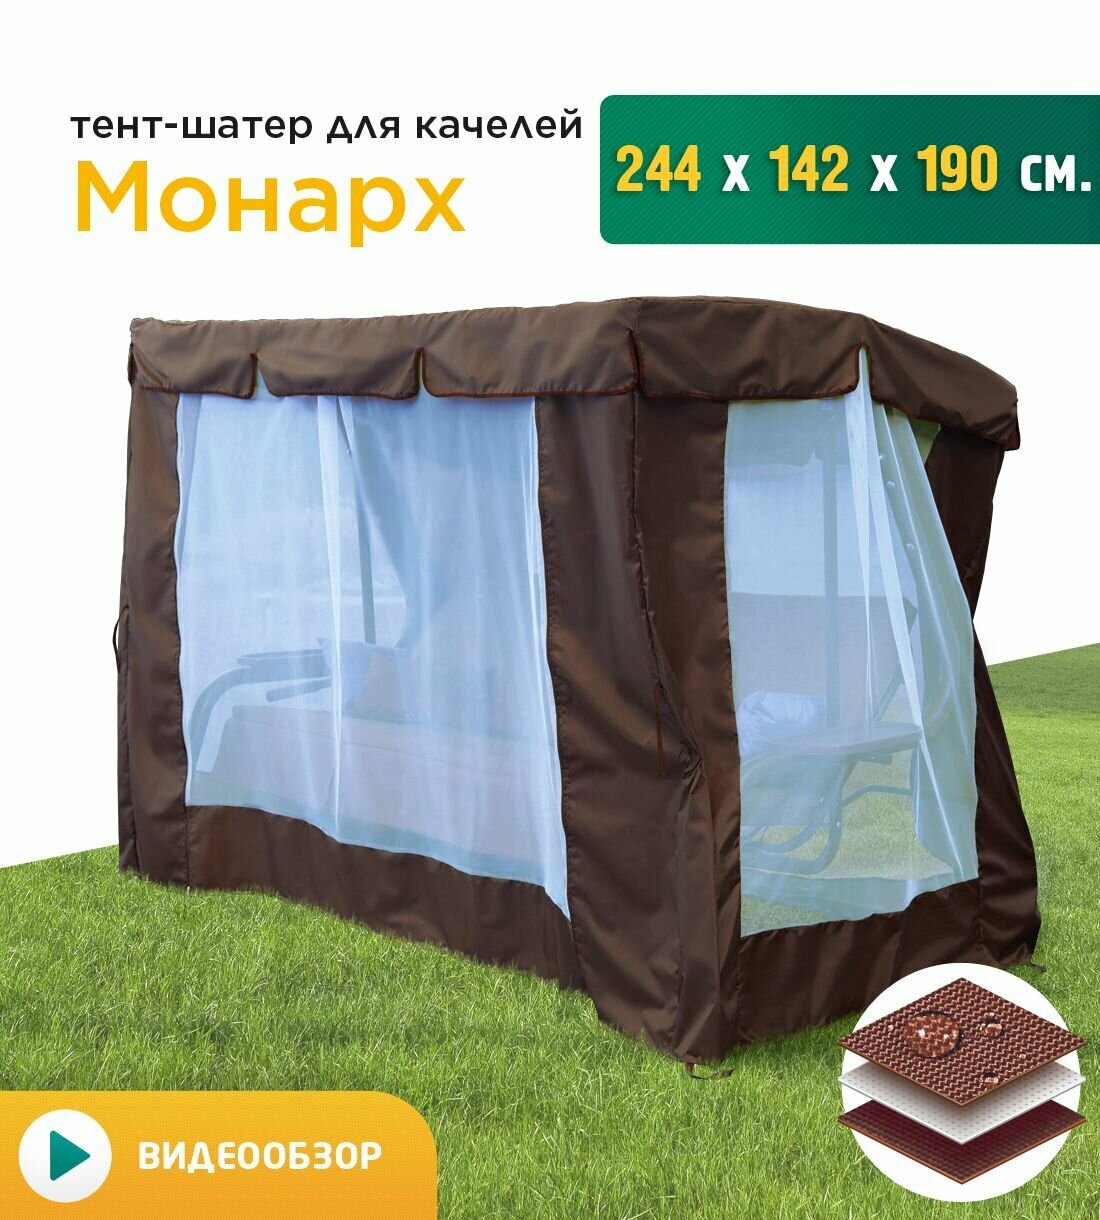 Тент-шатер с сеткой для качелей Монарх (244х142х190 см) коричневый